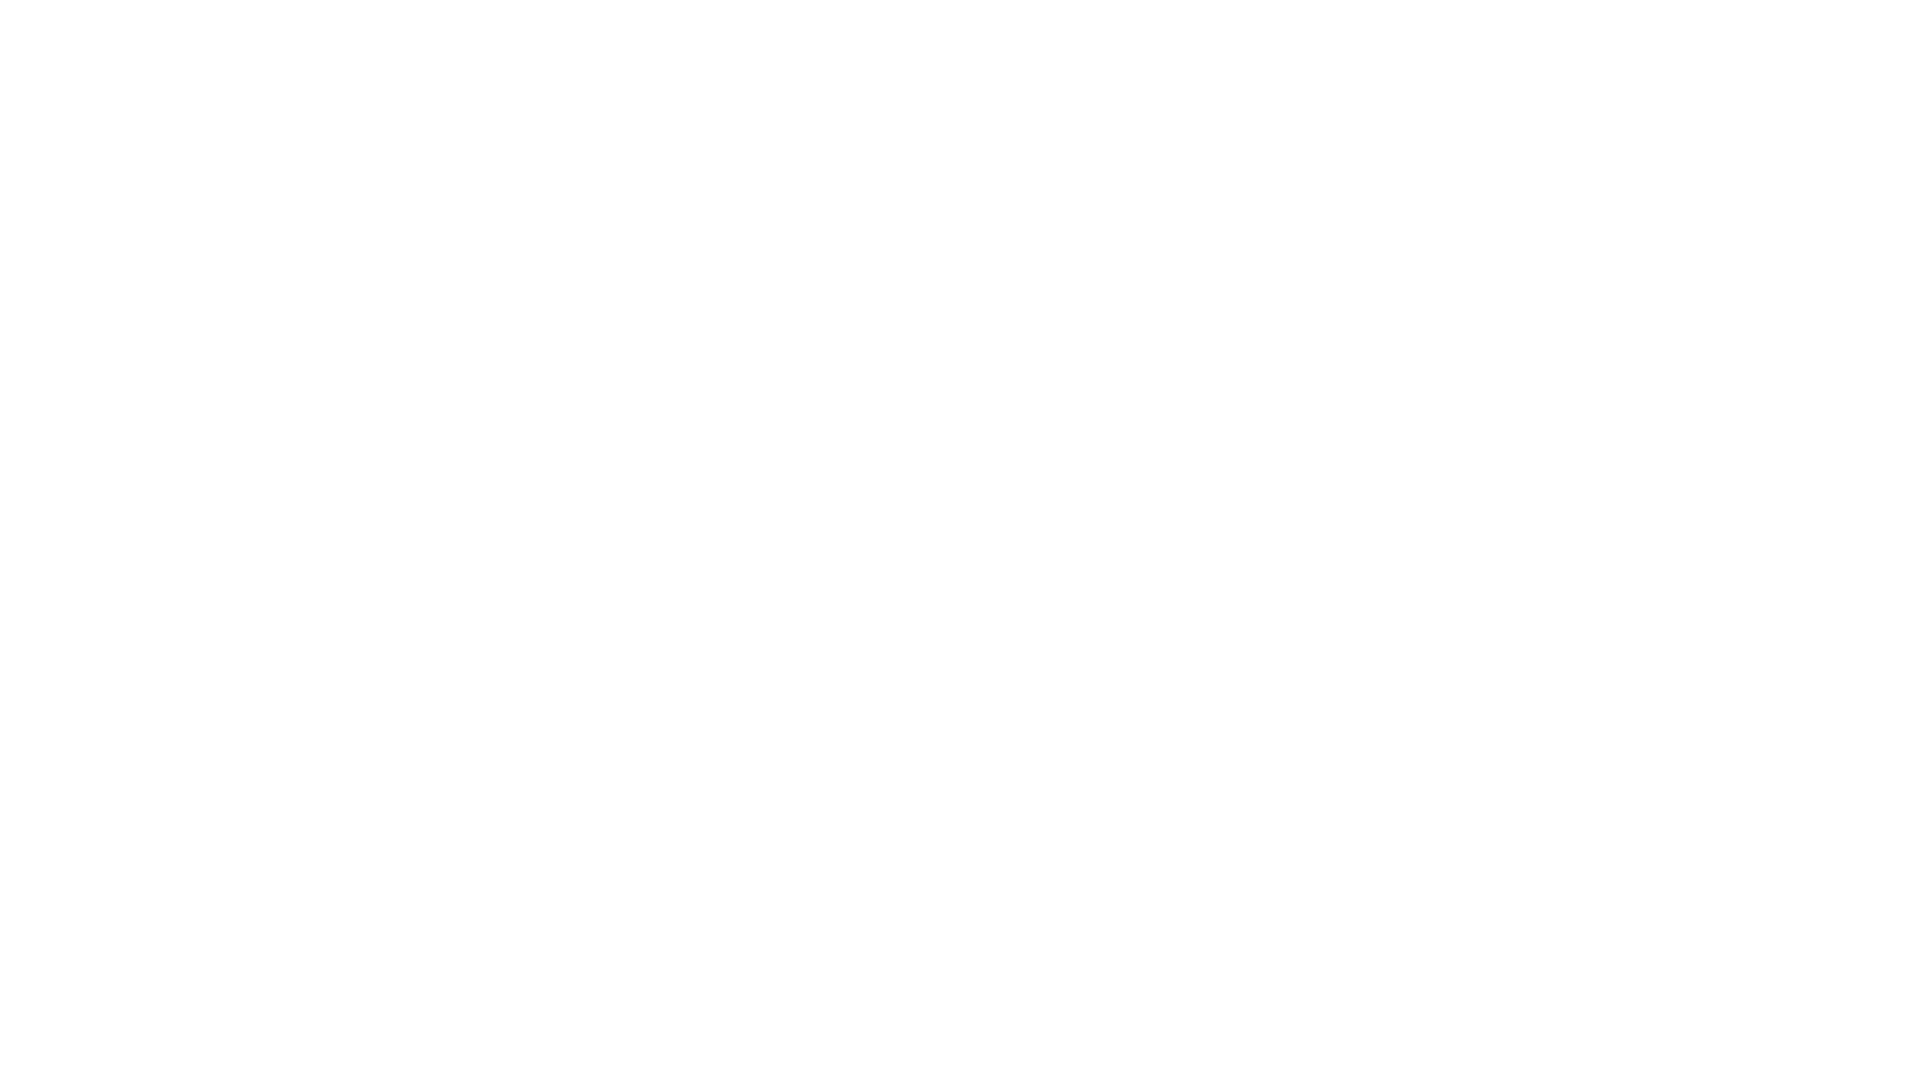 Canada White Logo - Startup Canada | Startup Canada English Red Logo (white) 1920x1080 ...